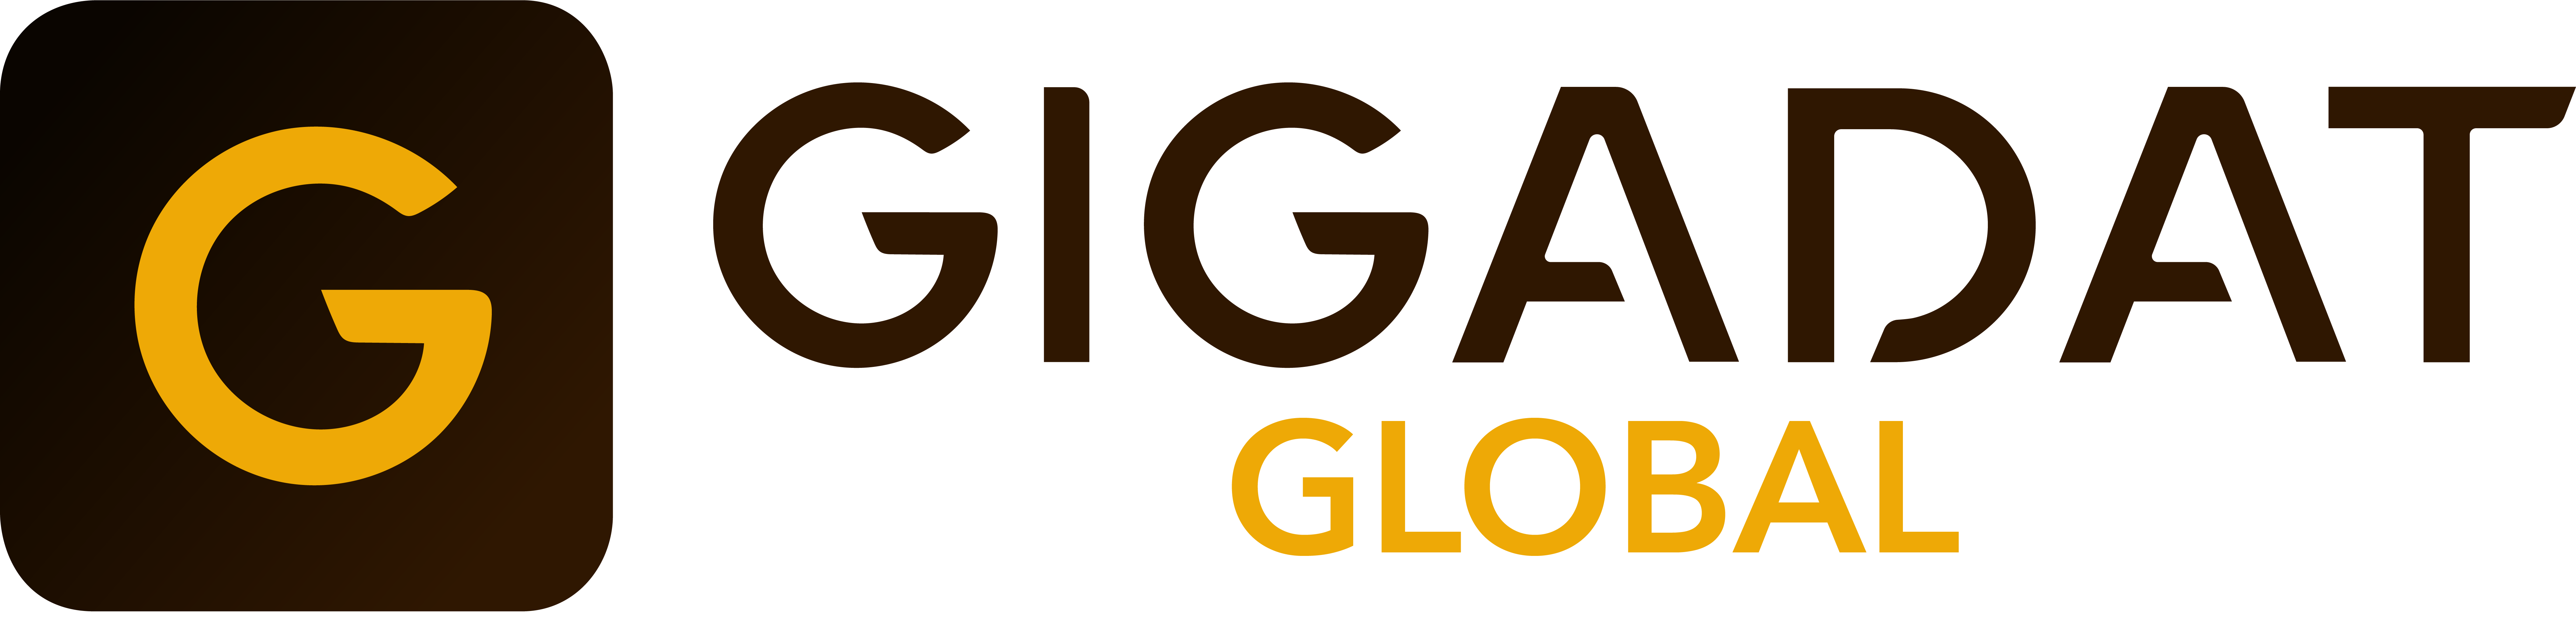 Gigadat Global